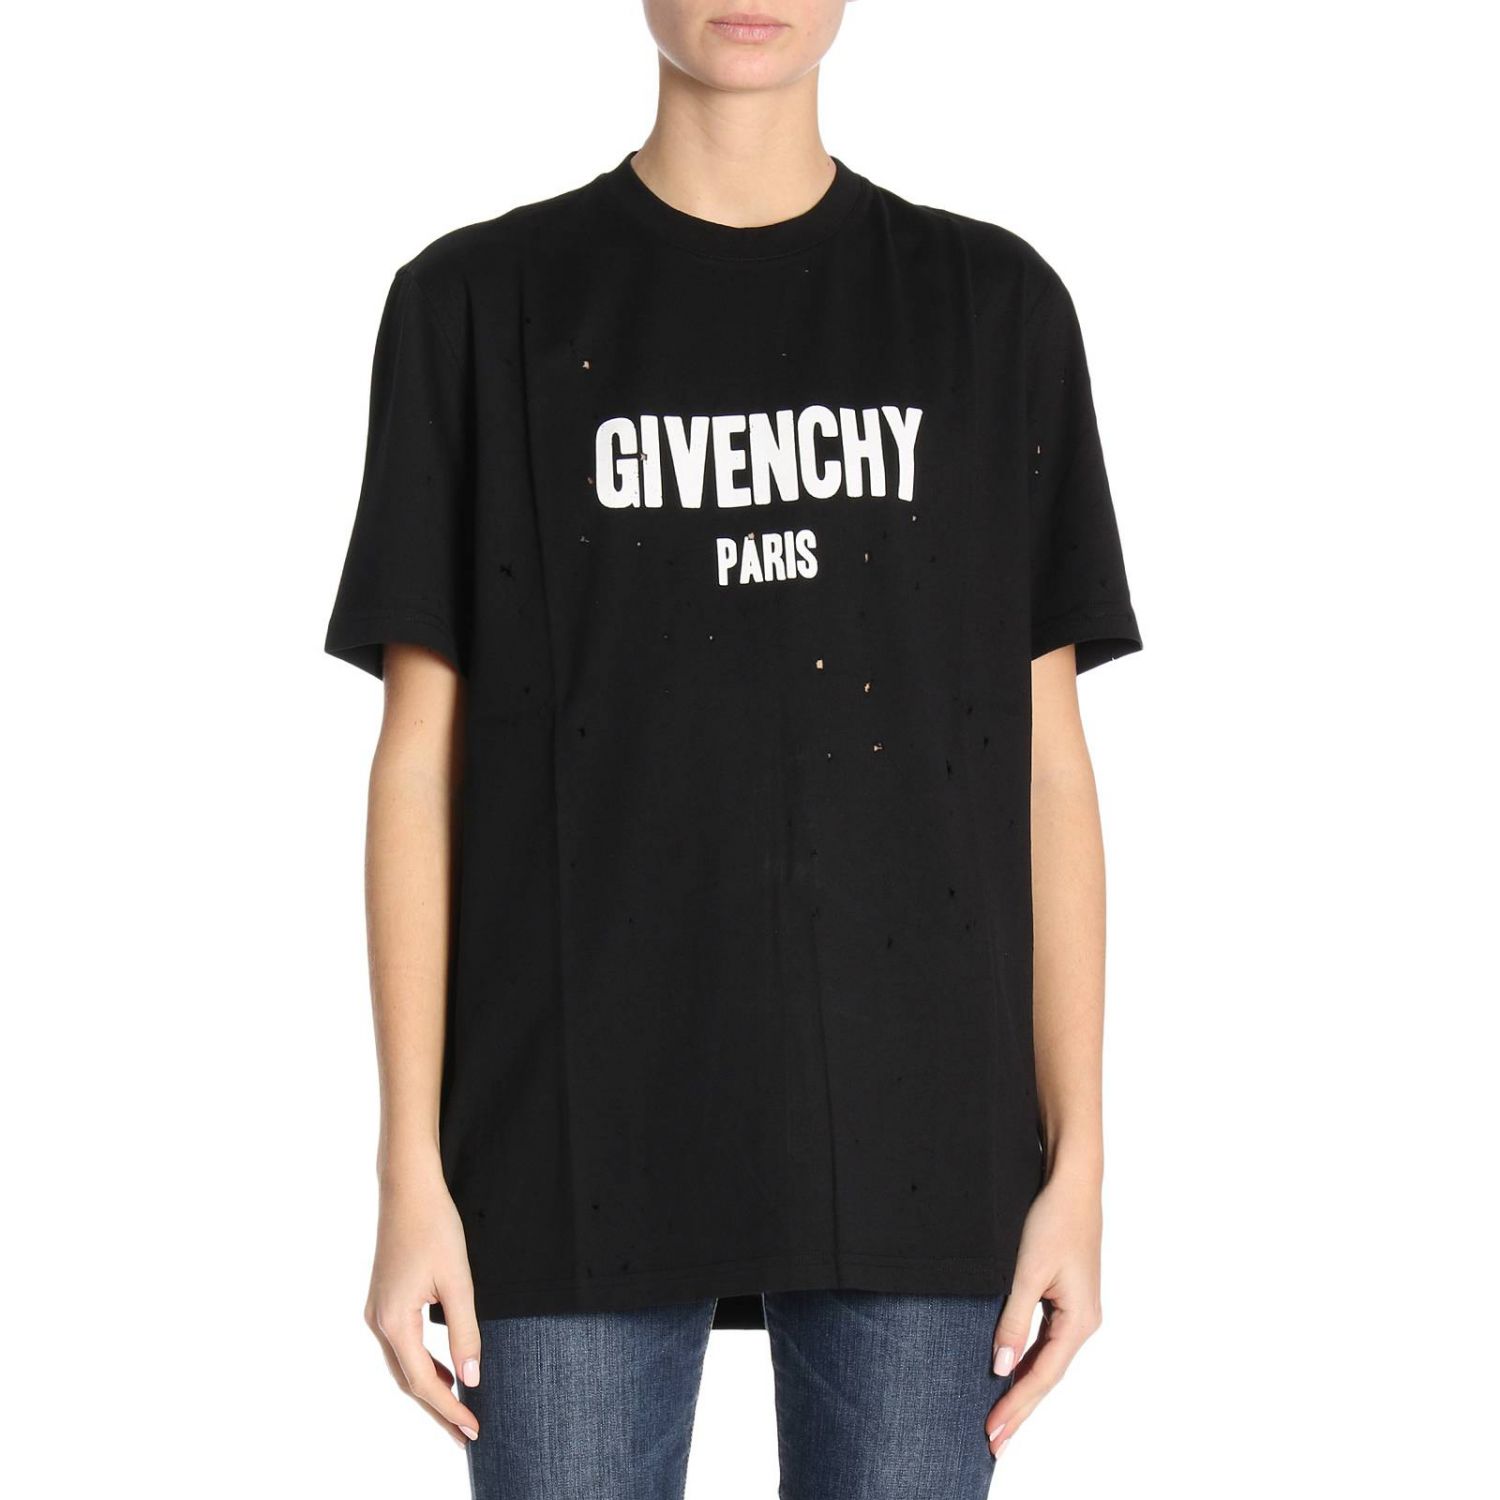 givenchy shirt women's